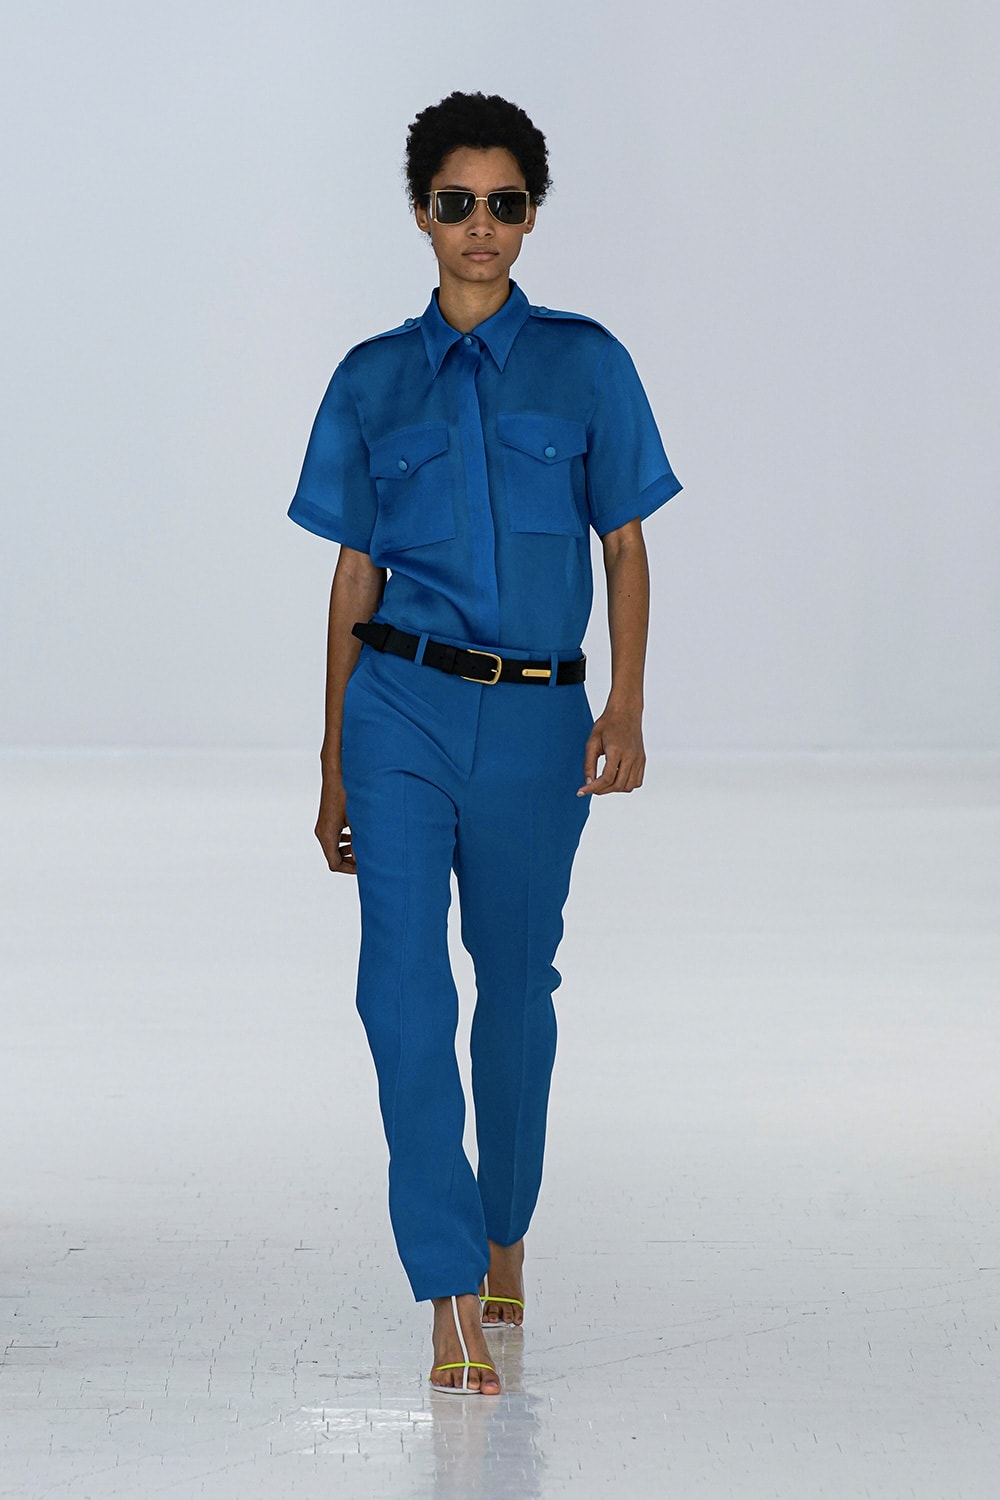 Helmut Lang SS20 Runway Collection New York Fashion Week NYFW Unisex Men Women MARK THOMAS Spring/Summer 2020 outerwear denim jeans translucent pieces